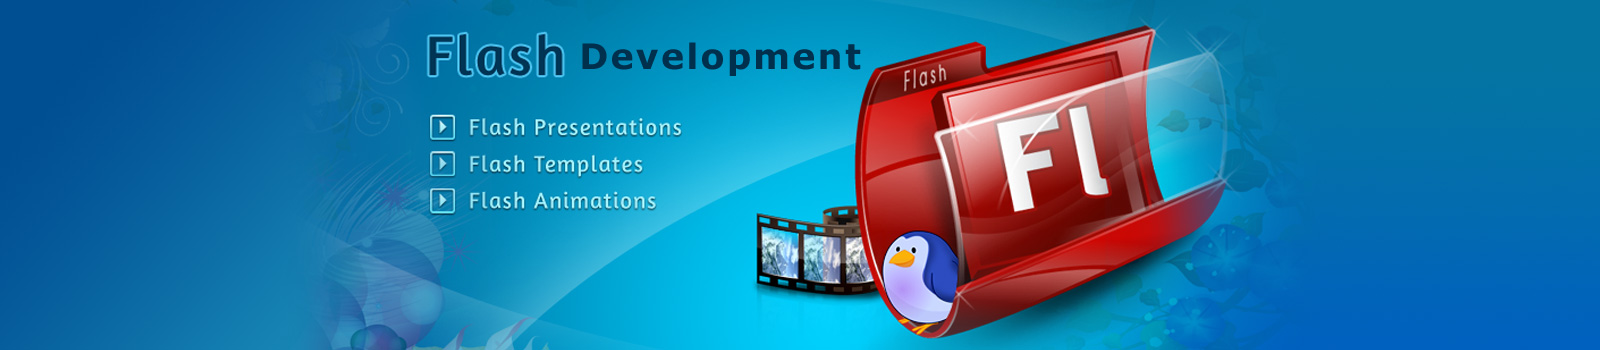 Flash Application Development